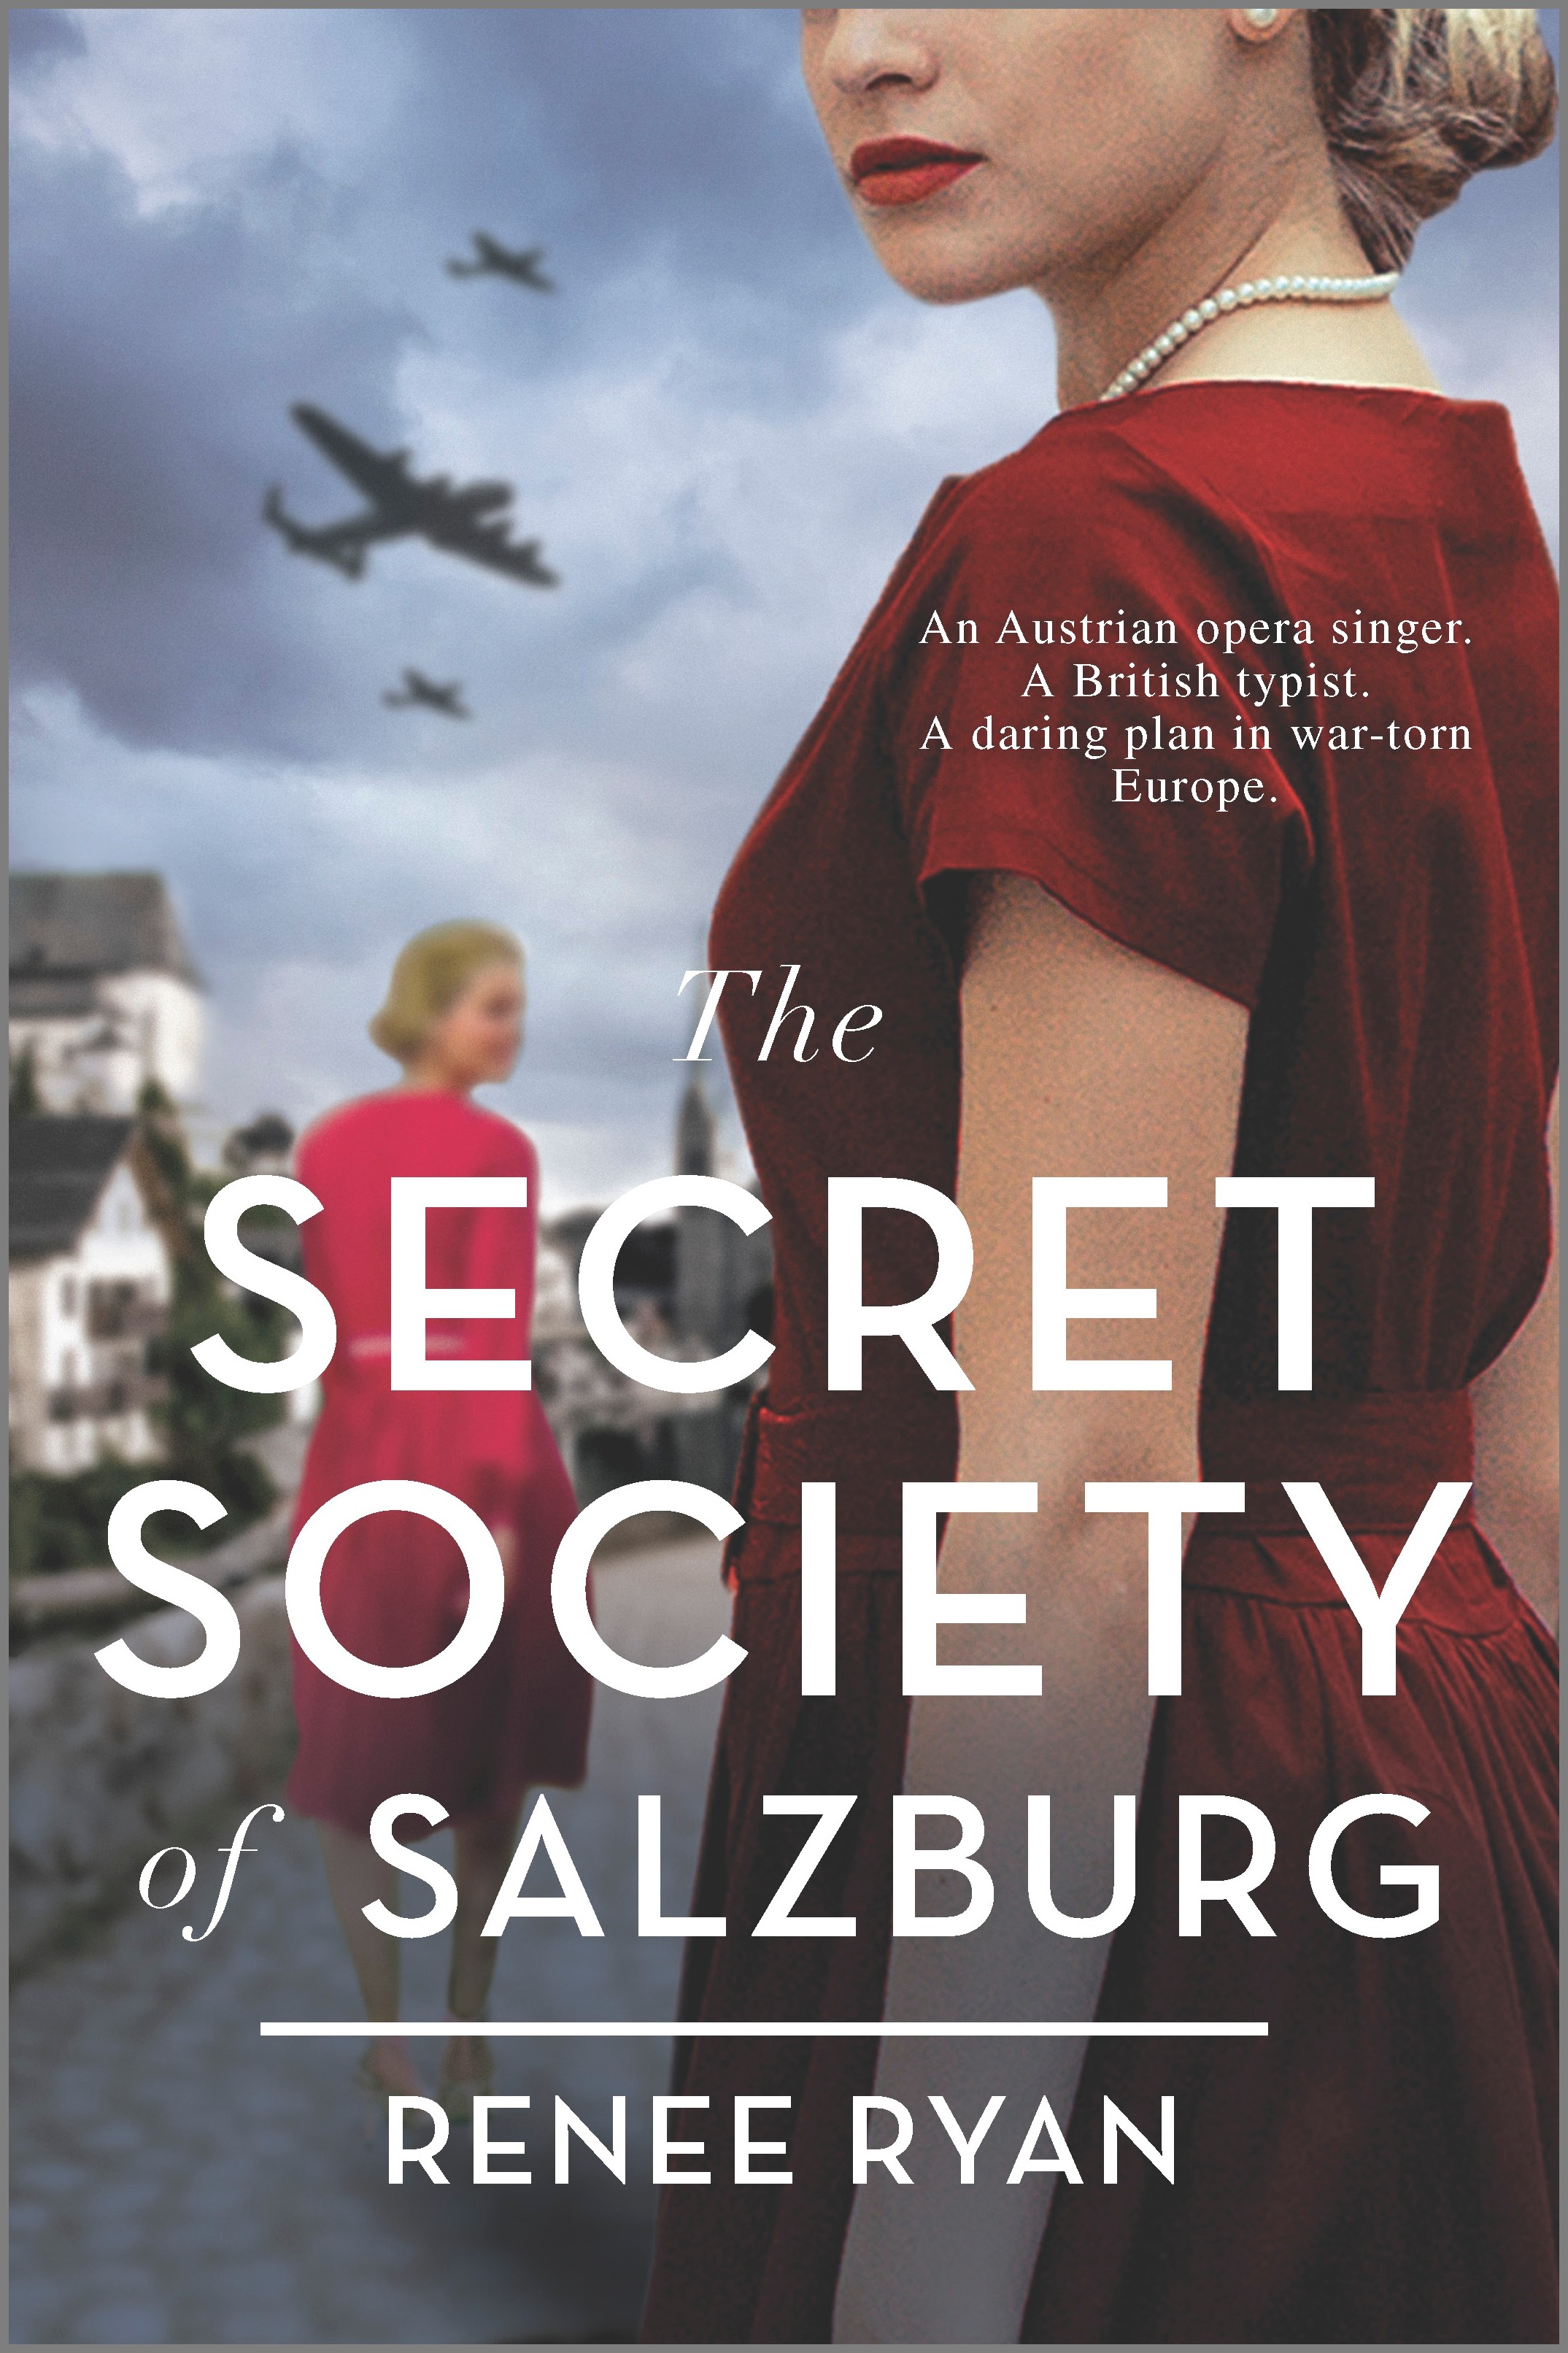 THE SECRET SOCIETY OF SALZBURG by Renee Ryan 